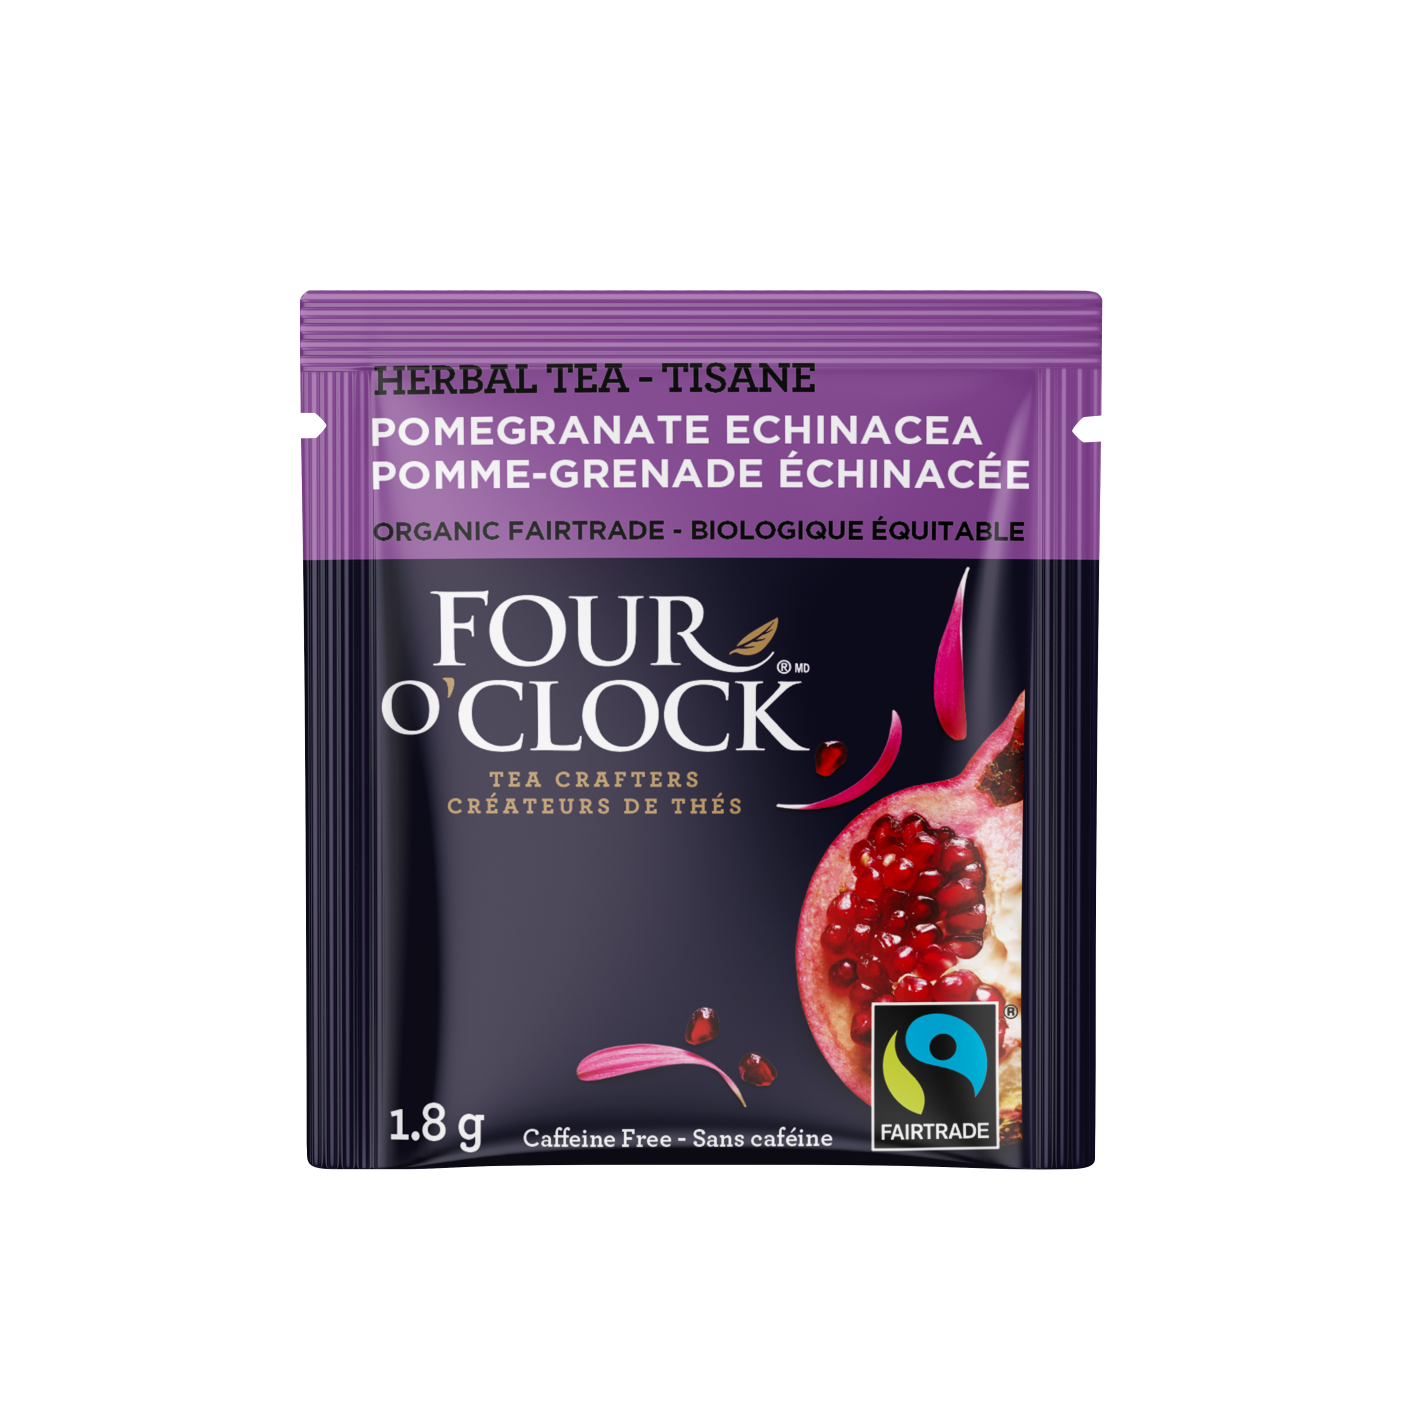 Pomegranate Echinacea Organic Fairtrade Herbal Tea